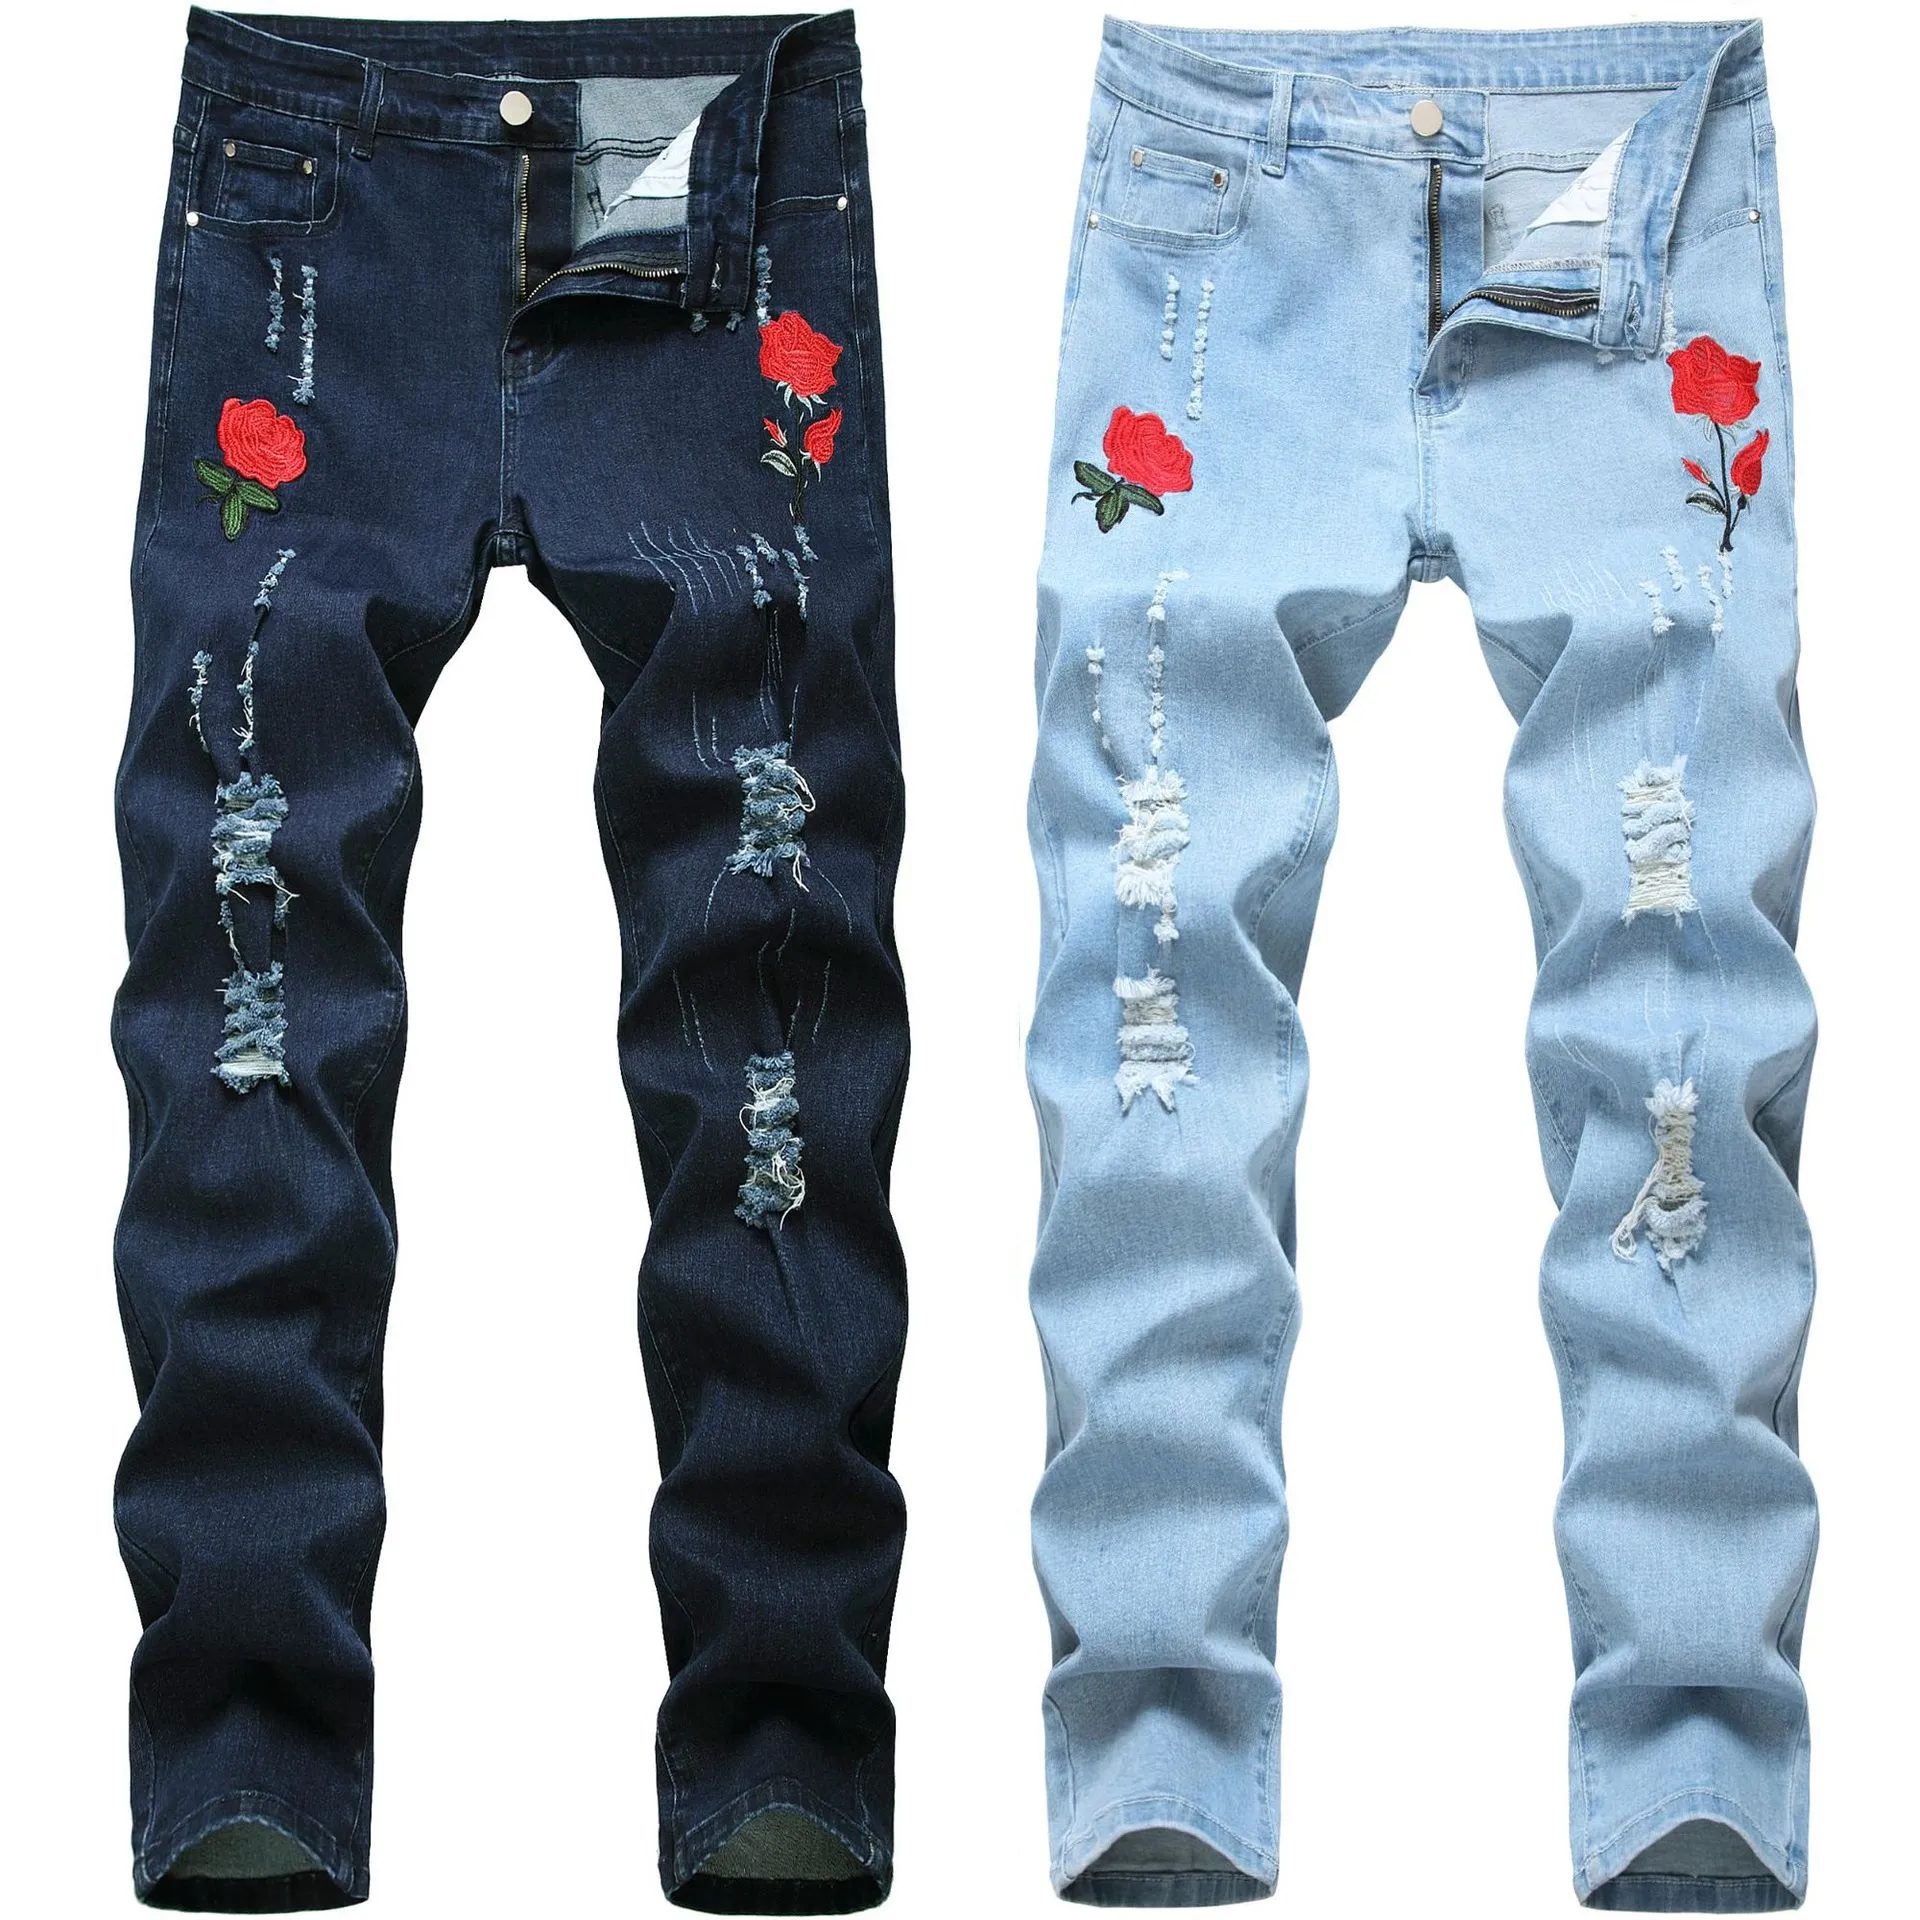 Jeans de hombre Rosa bordada para hombre Diseñador Moda Pantalones pitillo Lápiz Agujeros Azul Denim Primavera Otoño